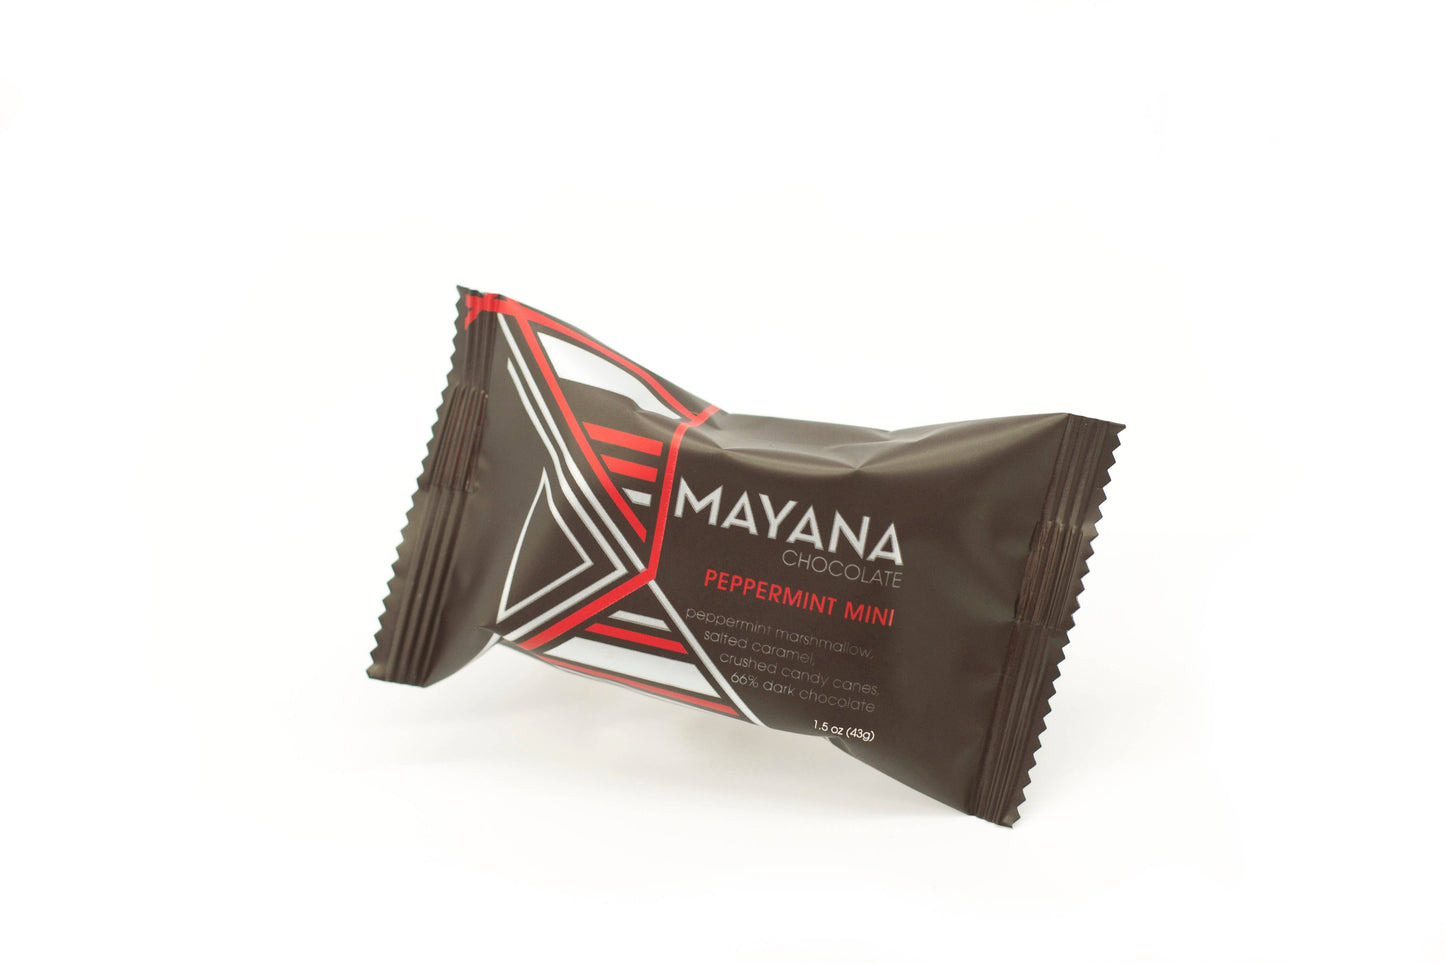 Peppermint Mini Chocolate Bar by Mayana Chocolate